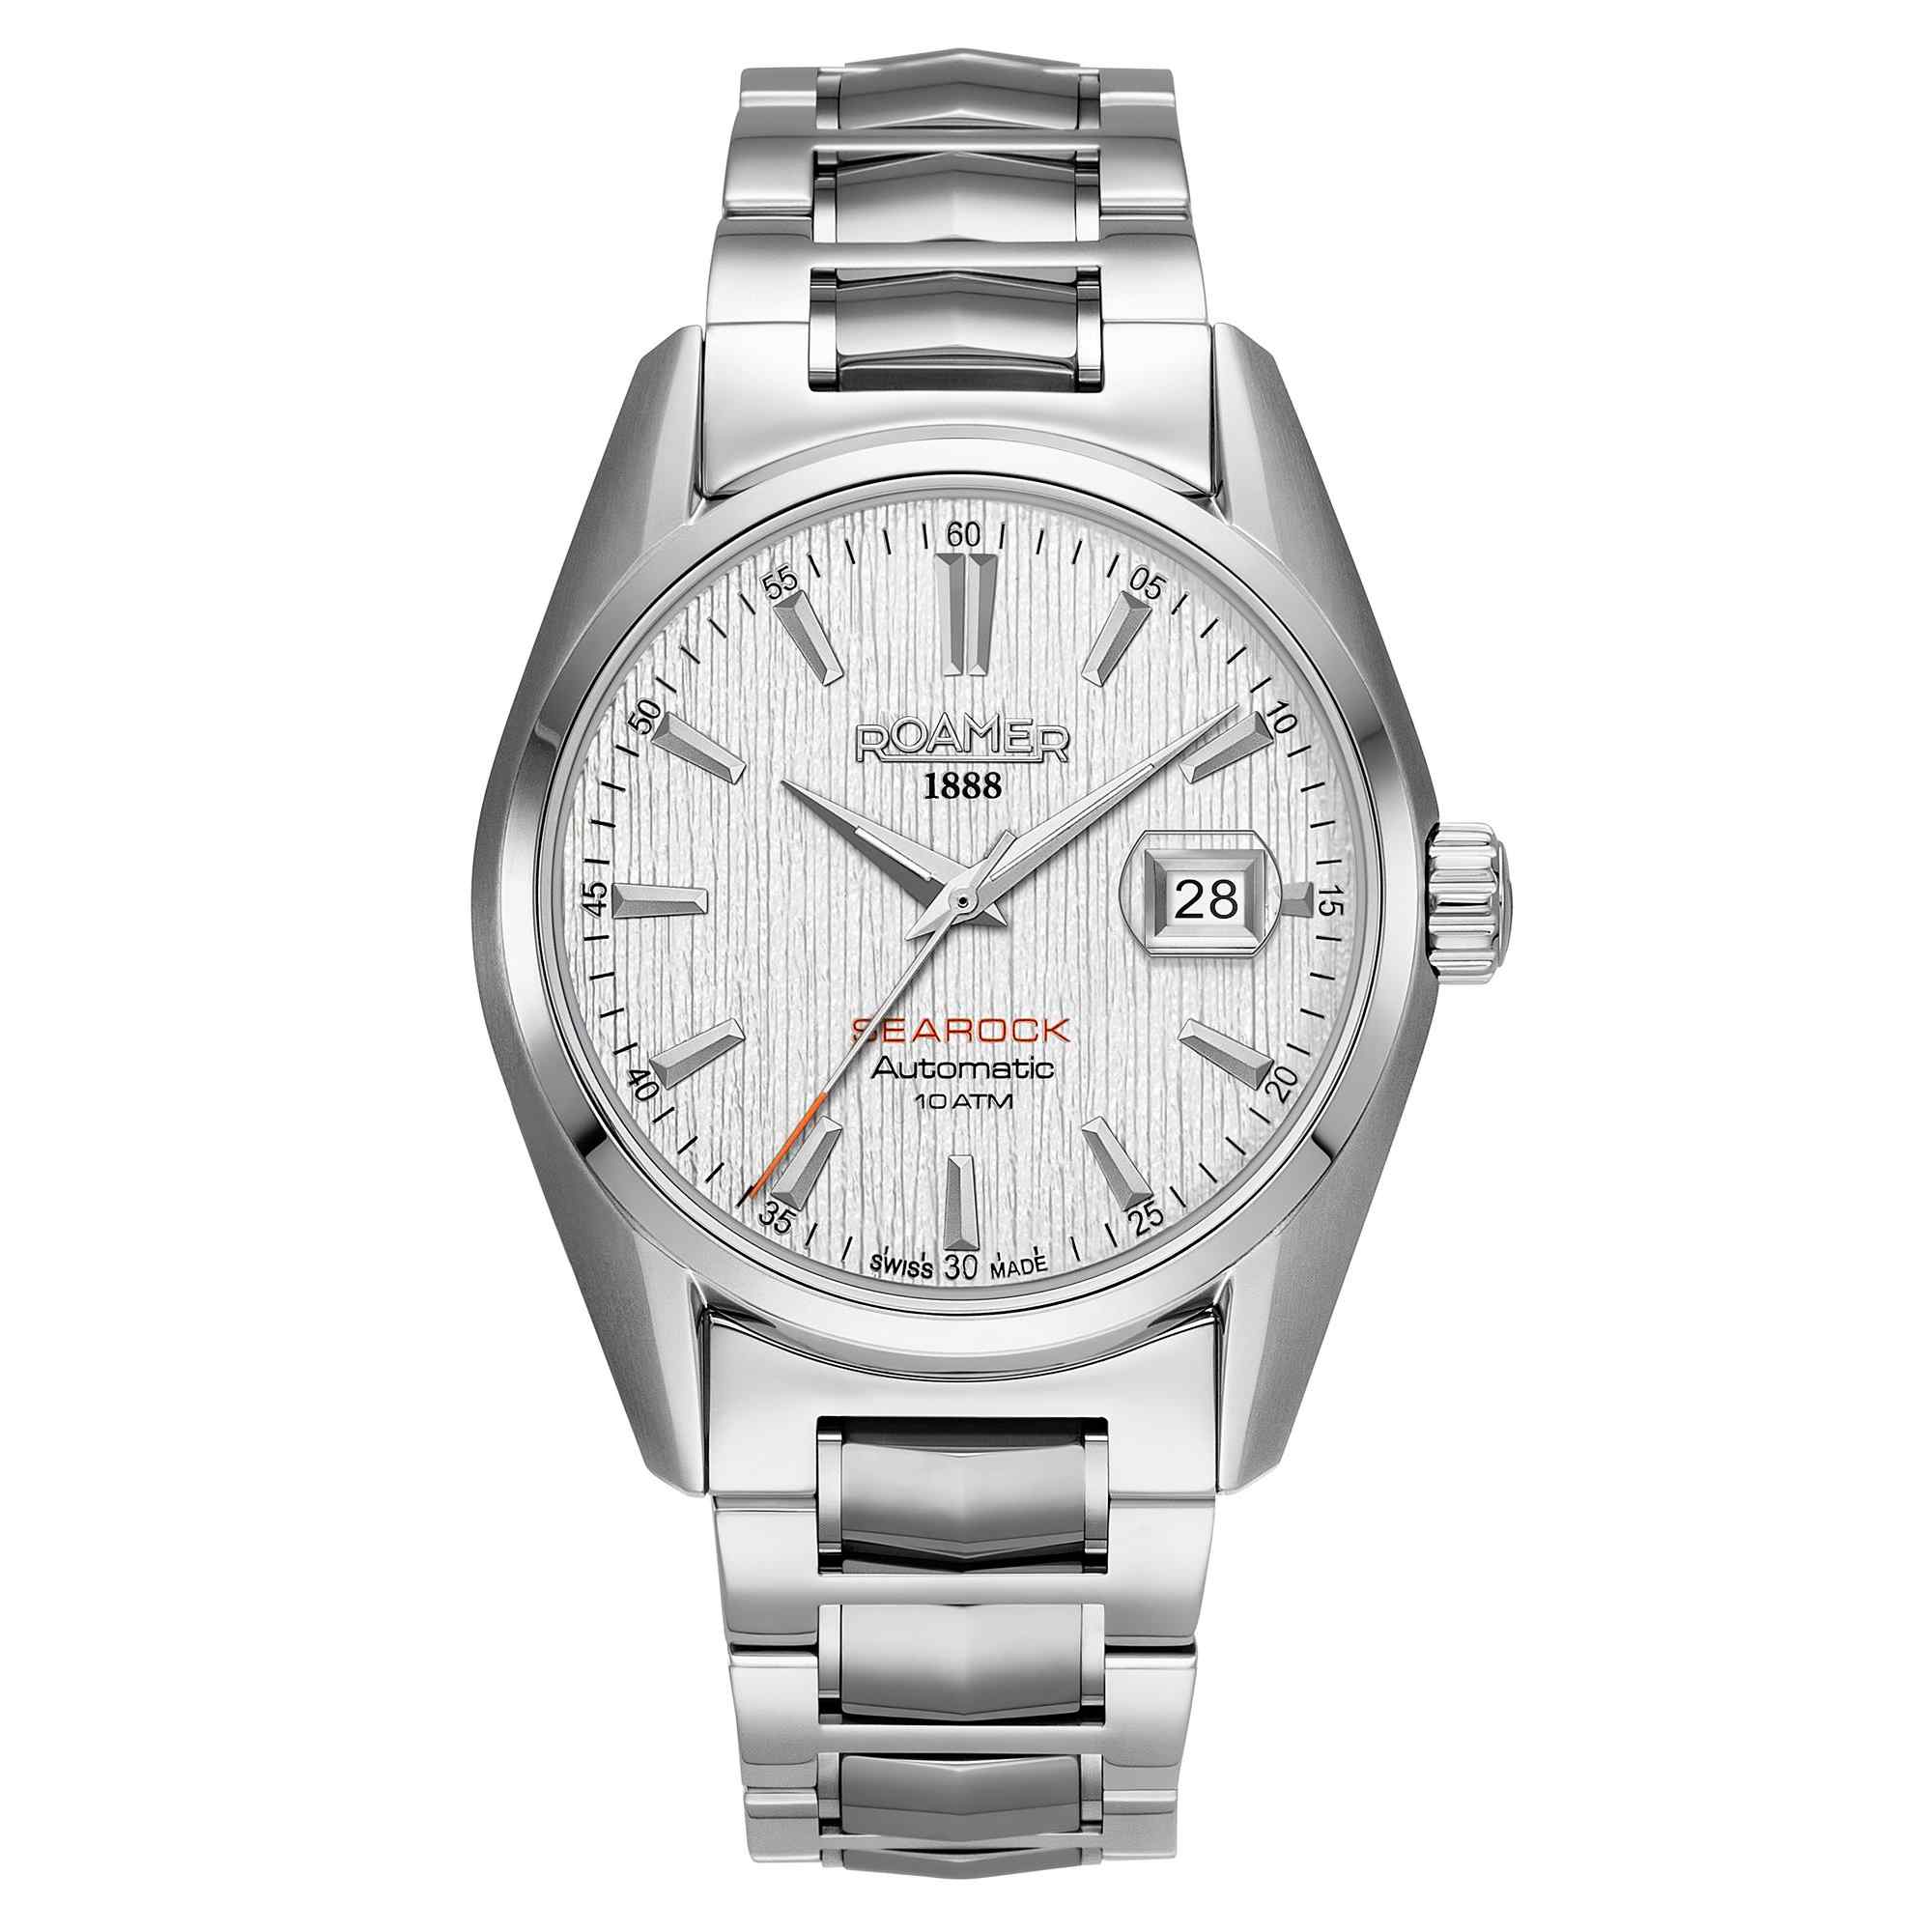 Photos - Wrist Watch Roamer 210665 41 25 20 Searock Automatic White Dial Wristwatch 